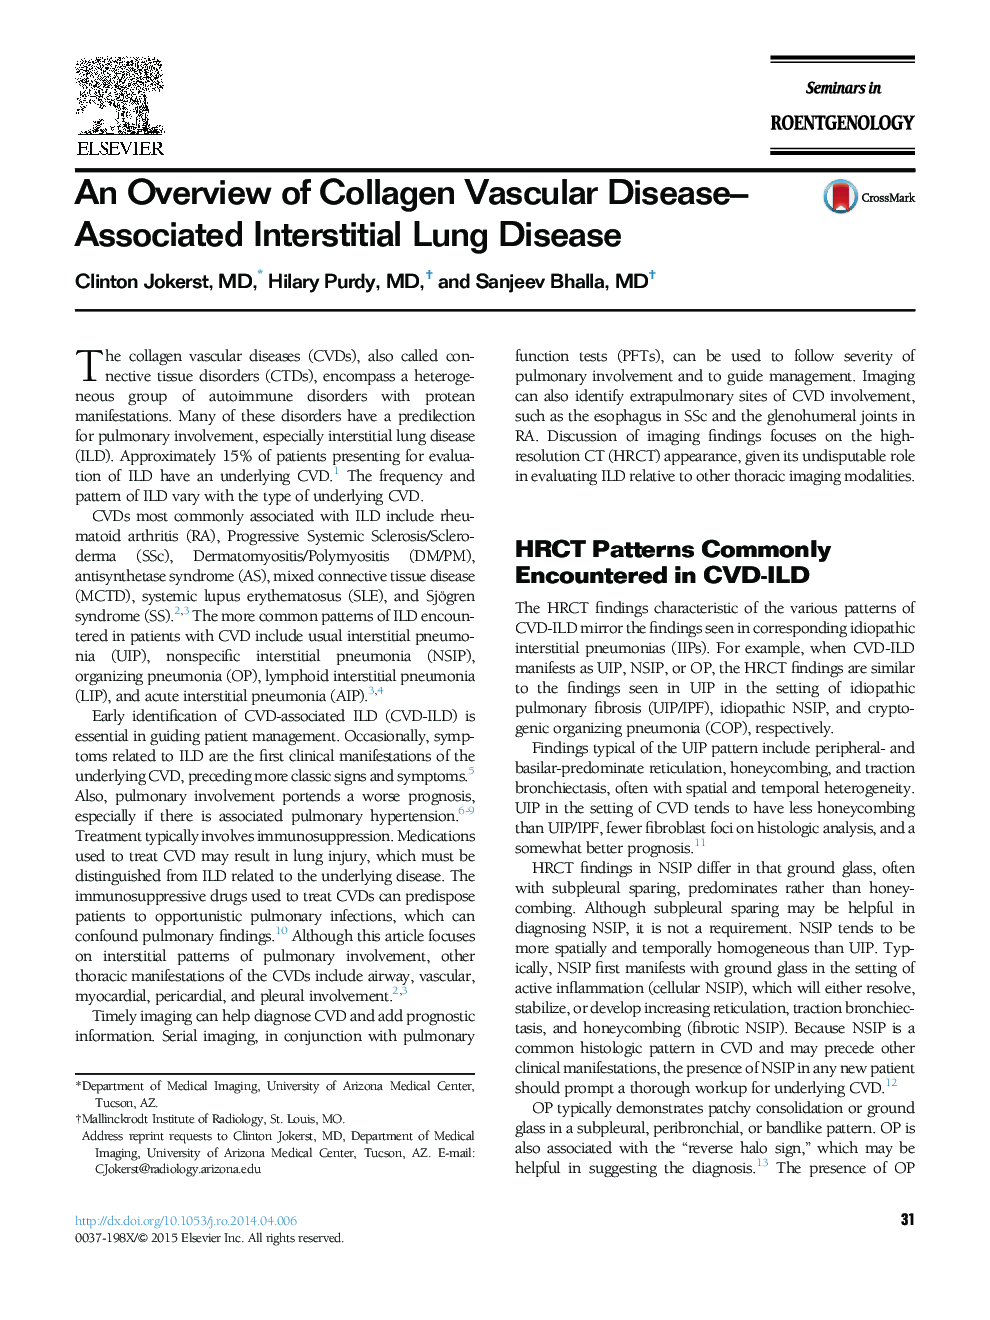 An Overview of Collagen Vascular Disease-Associated Interstitial Lung Disease